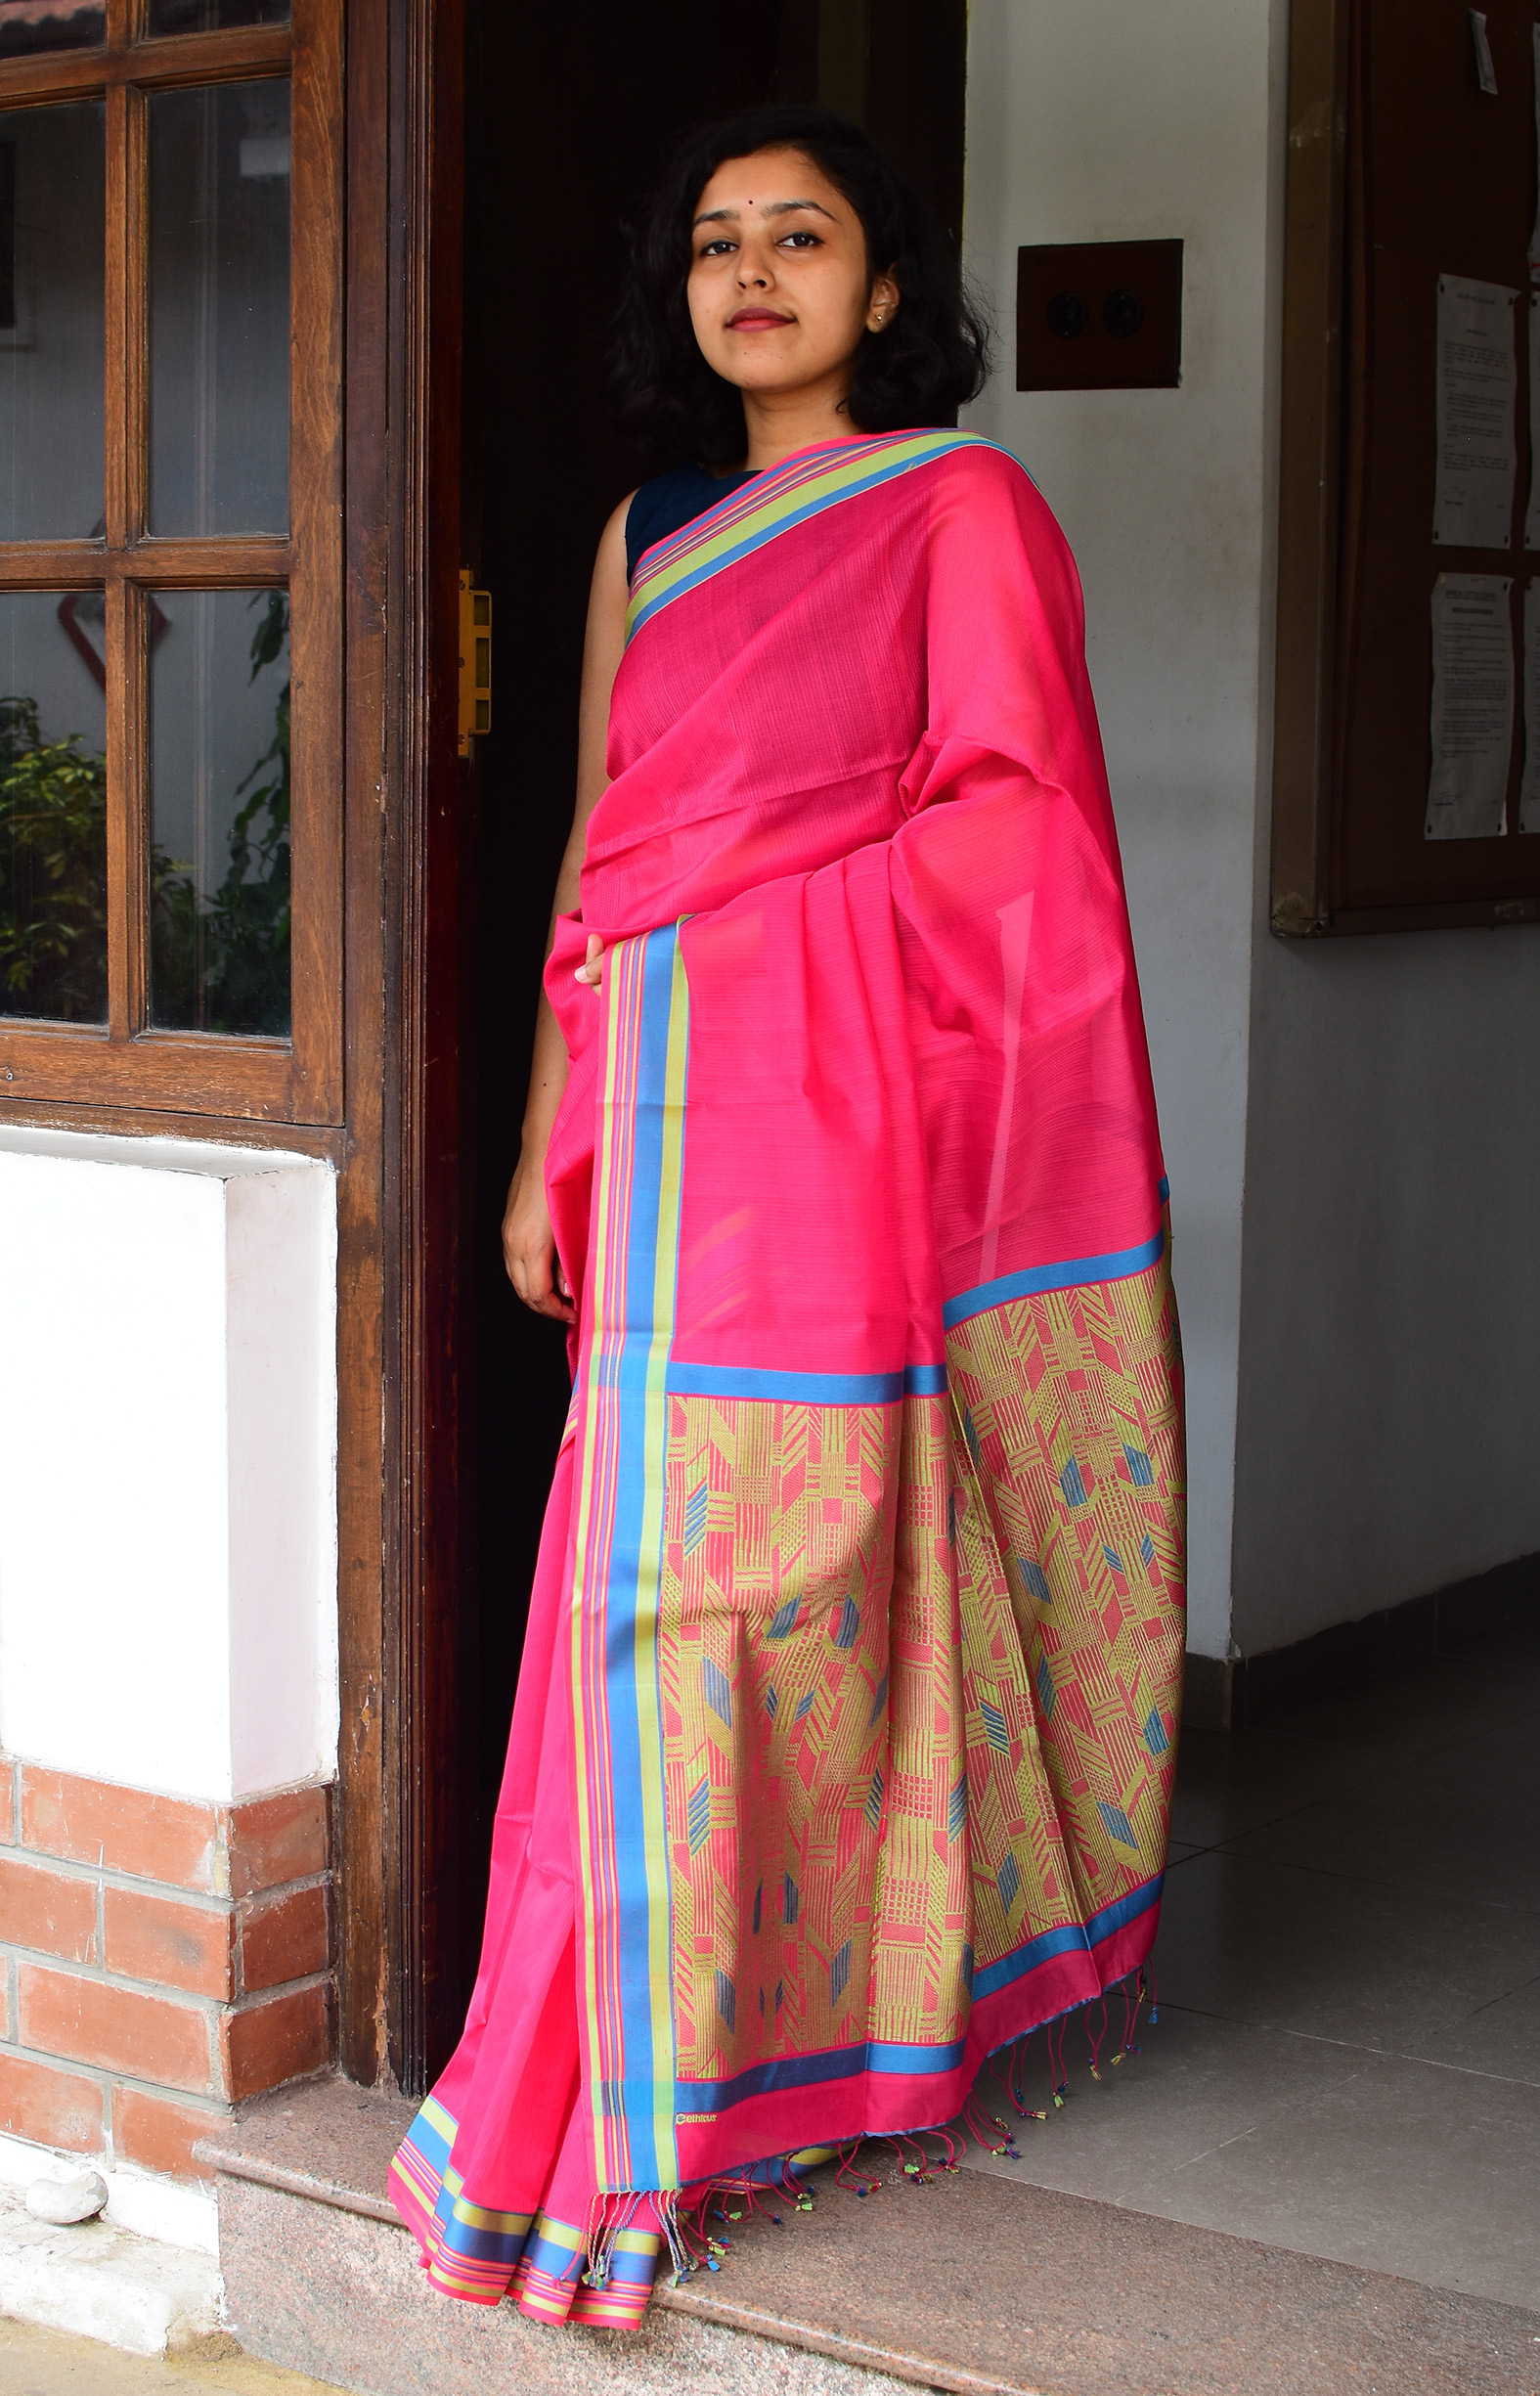 Fushia Pink, Handwoven Organic Cotton, Textured Weave , Jacquard, Work Wear Saree